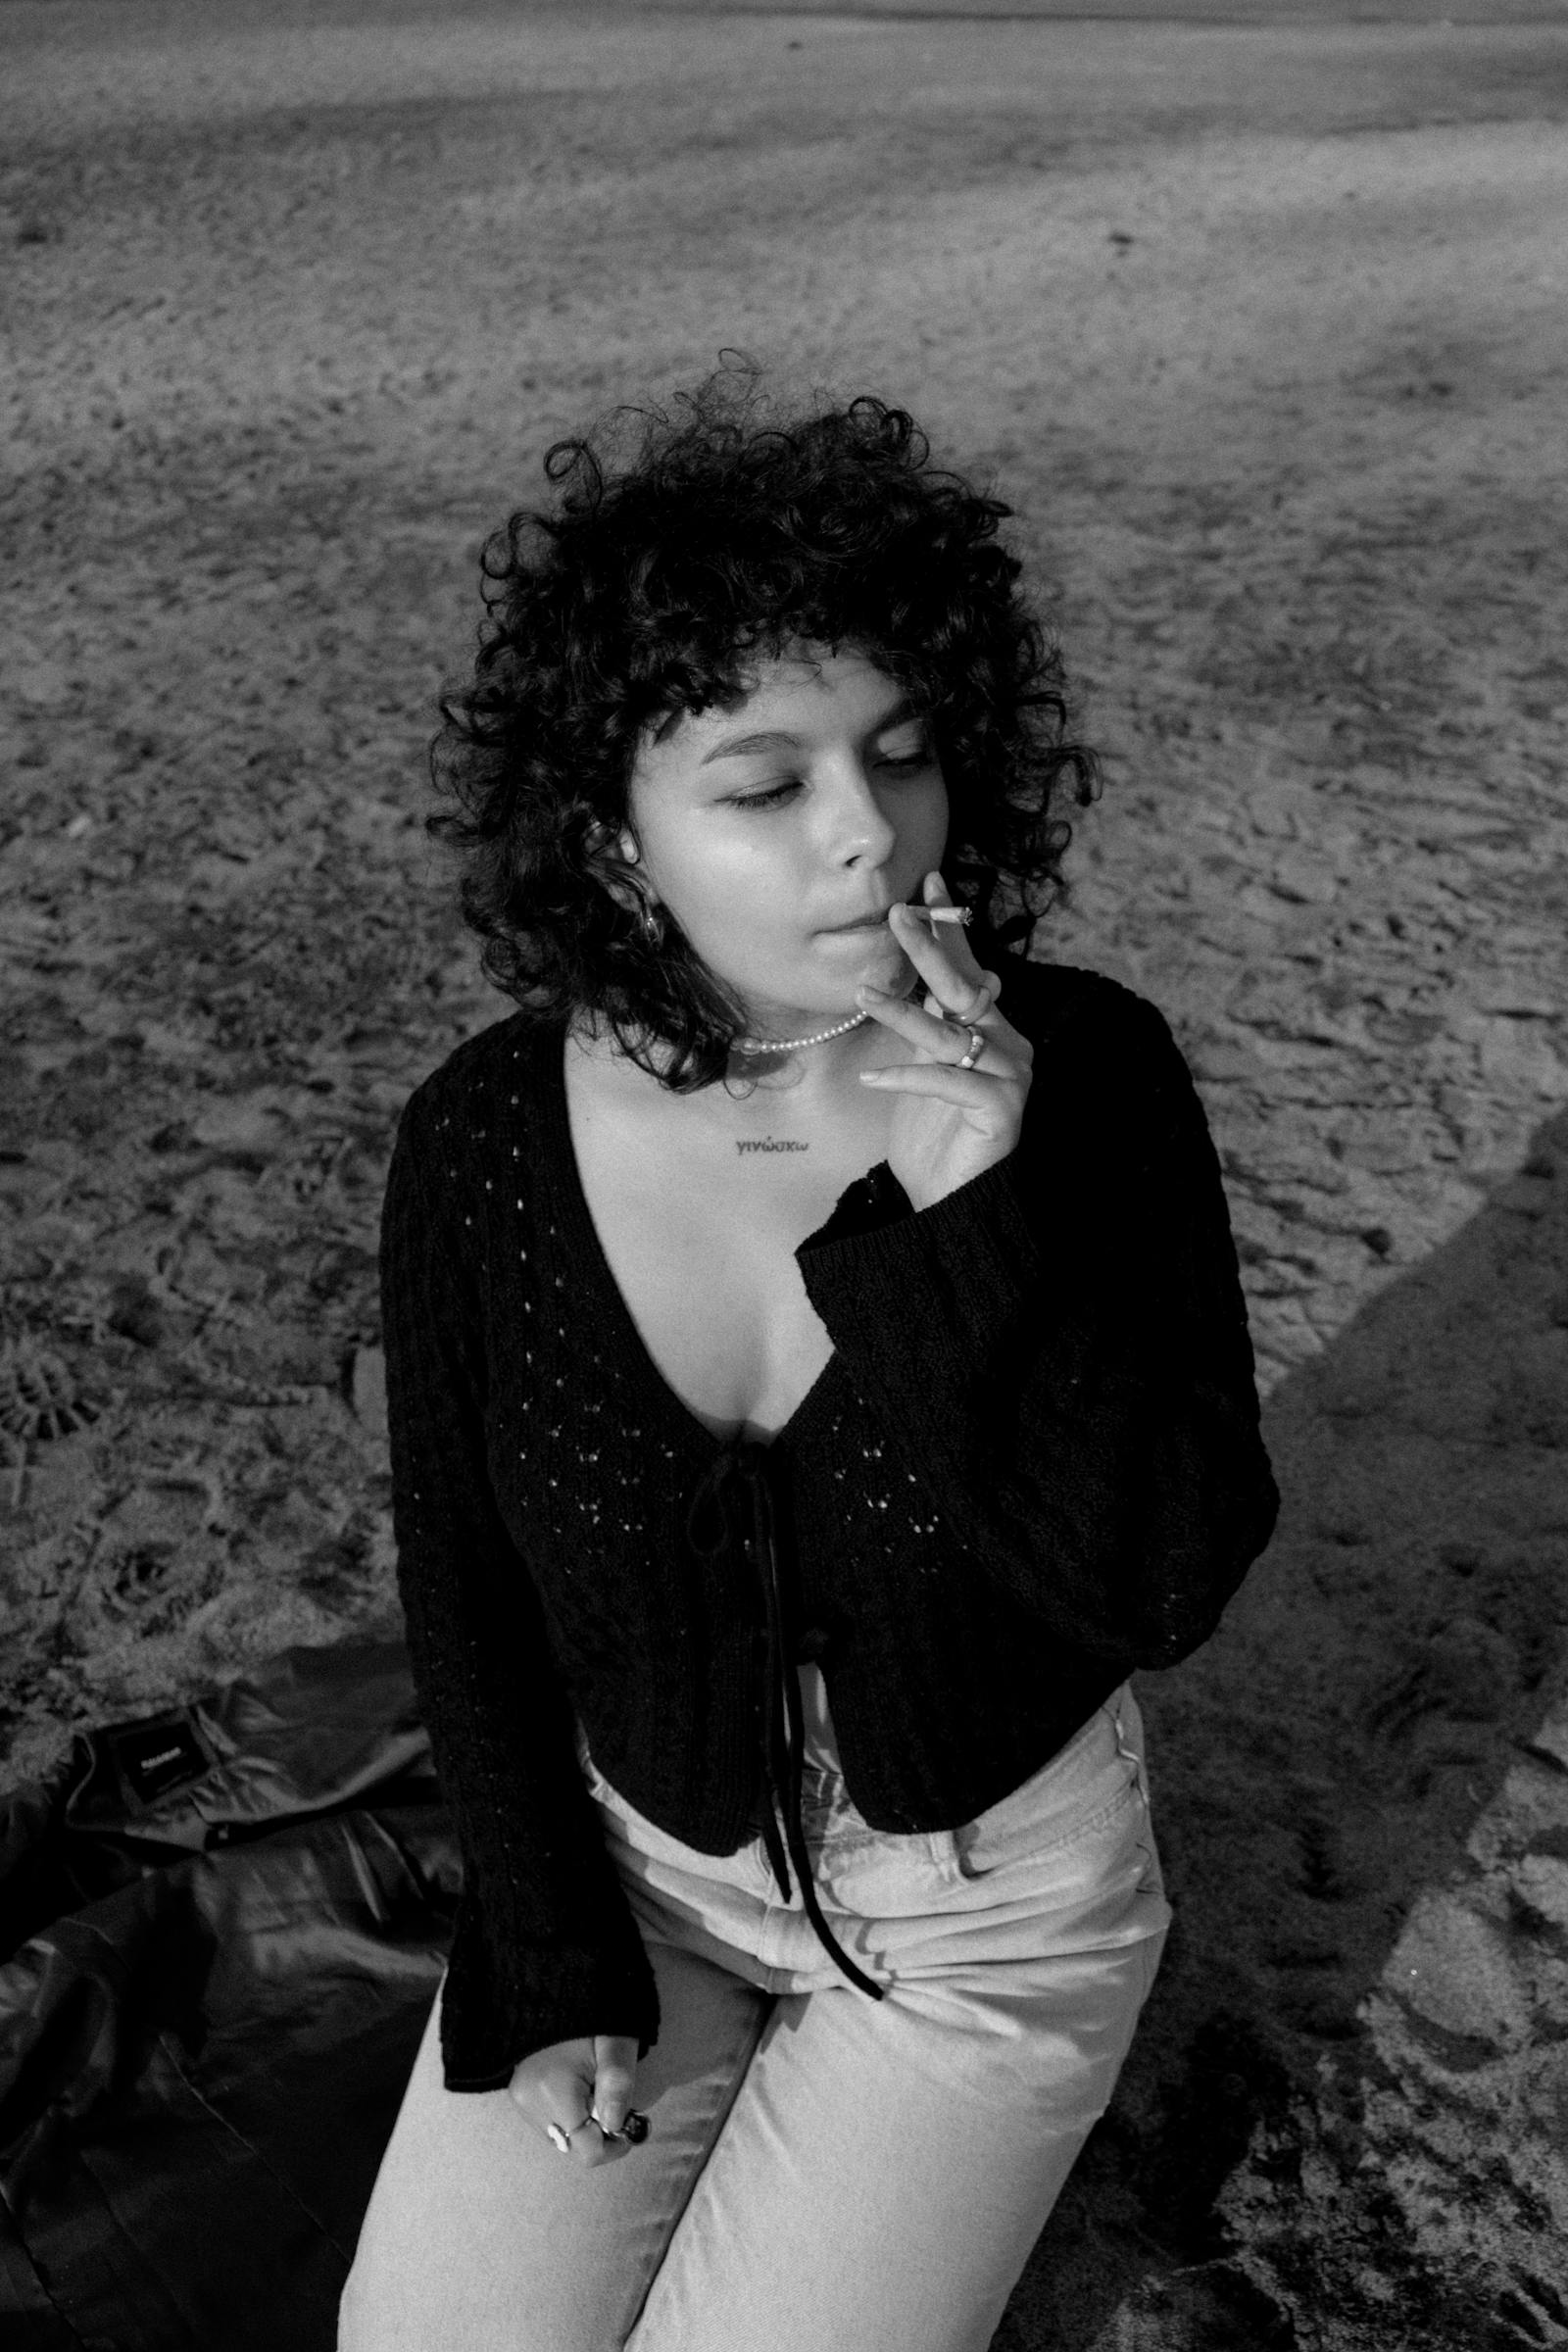 Silhouette Of Woman Smoking Cigarette · Free Stock Photo